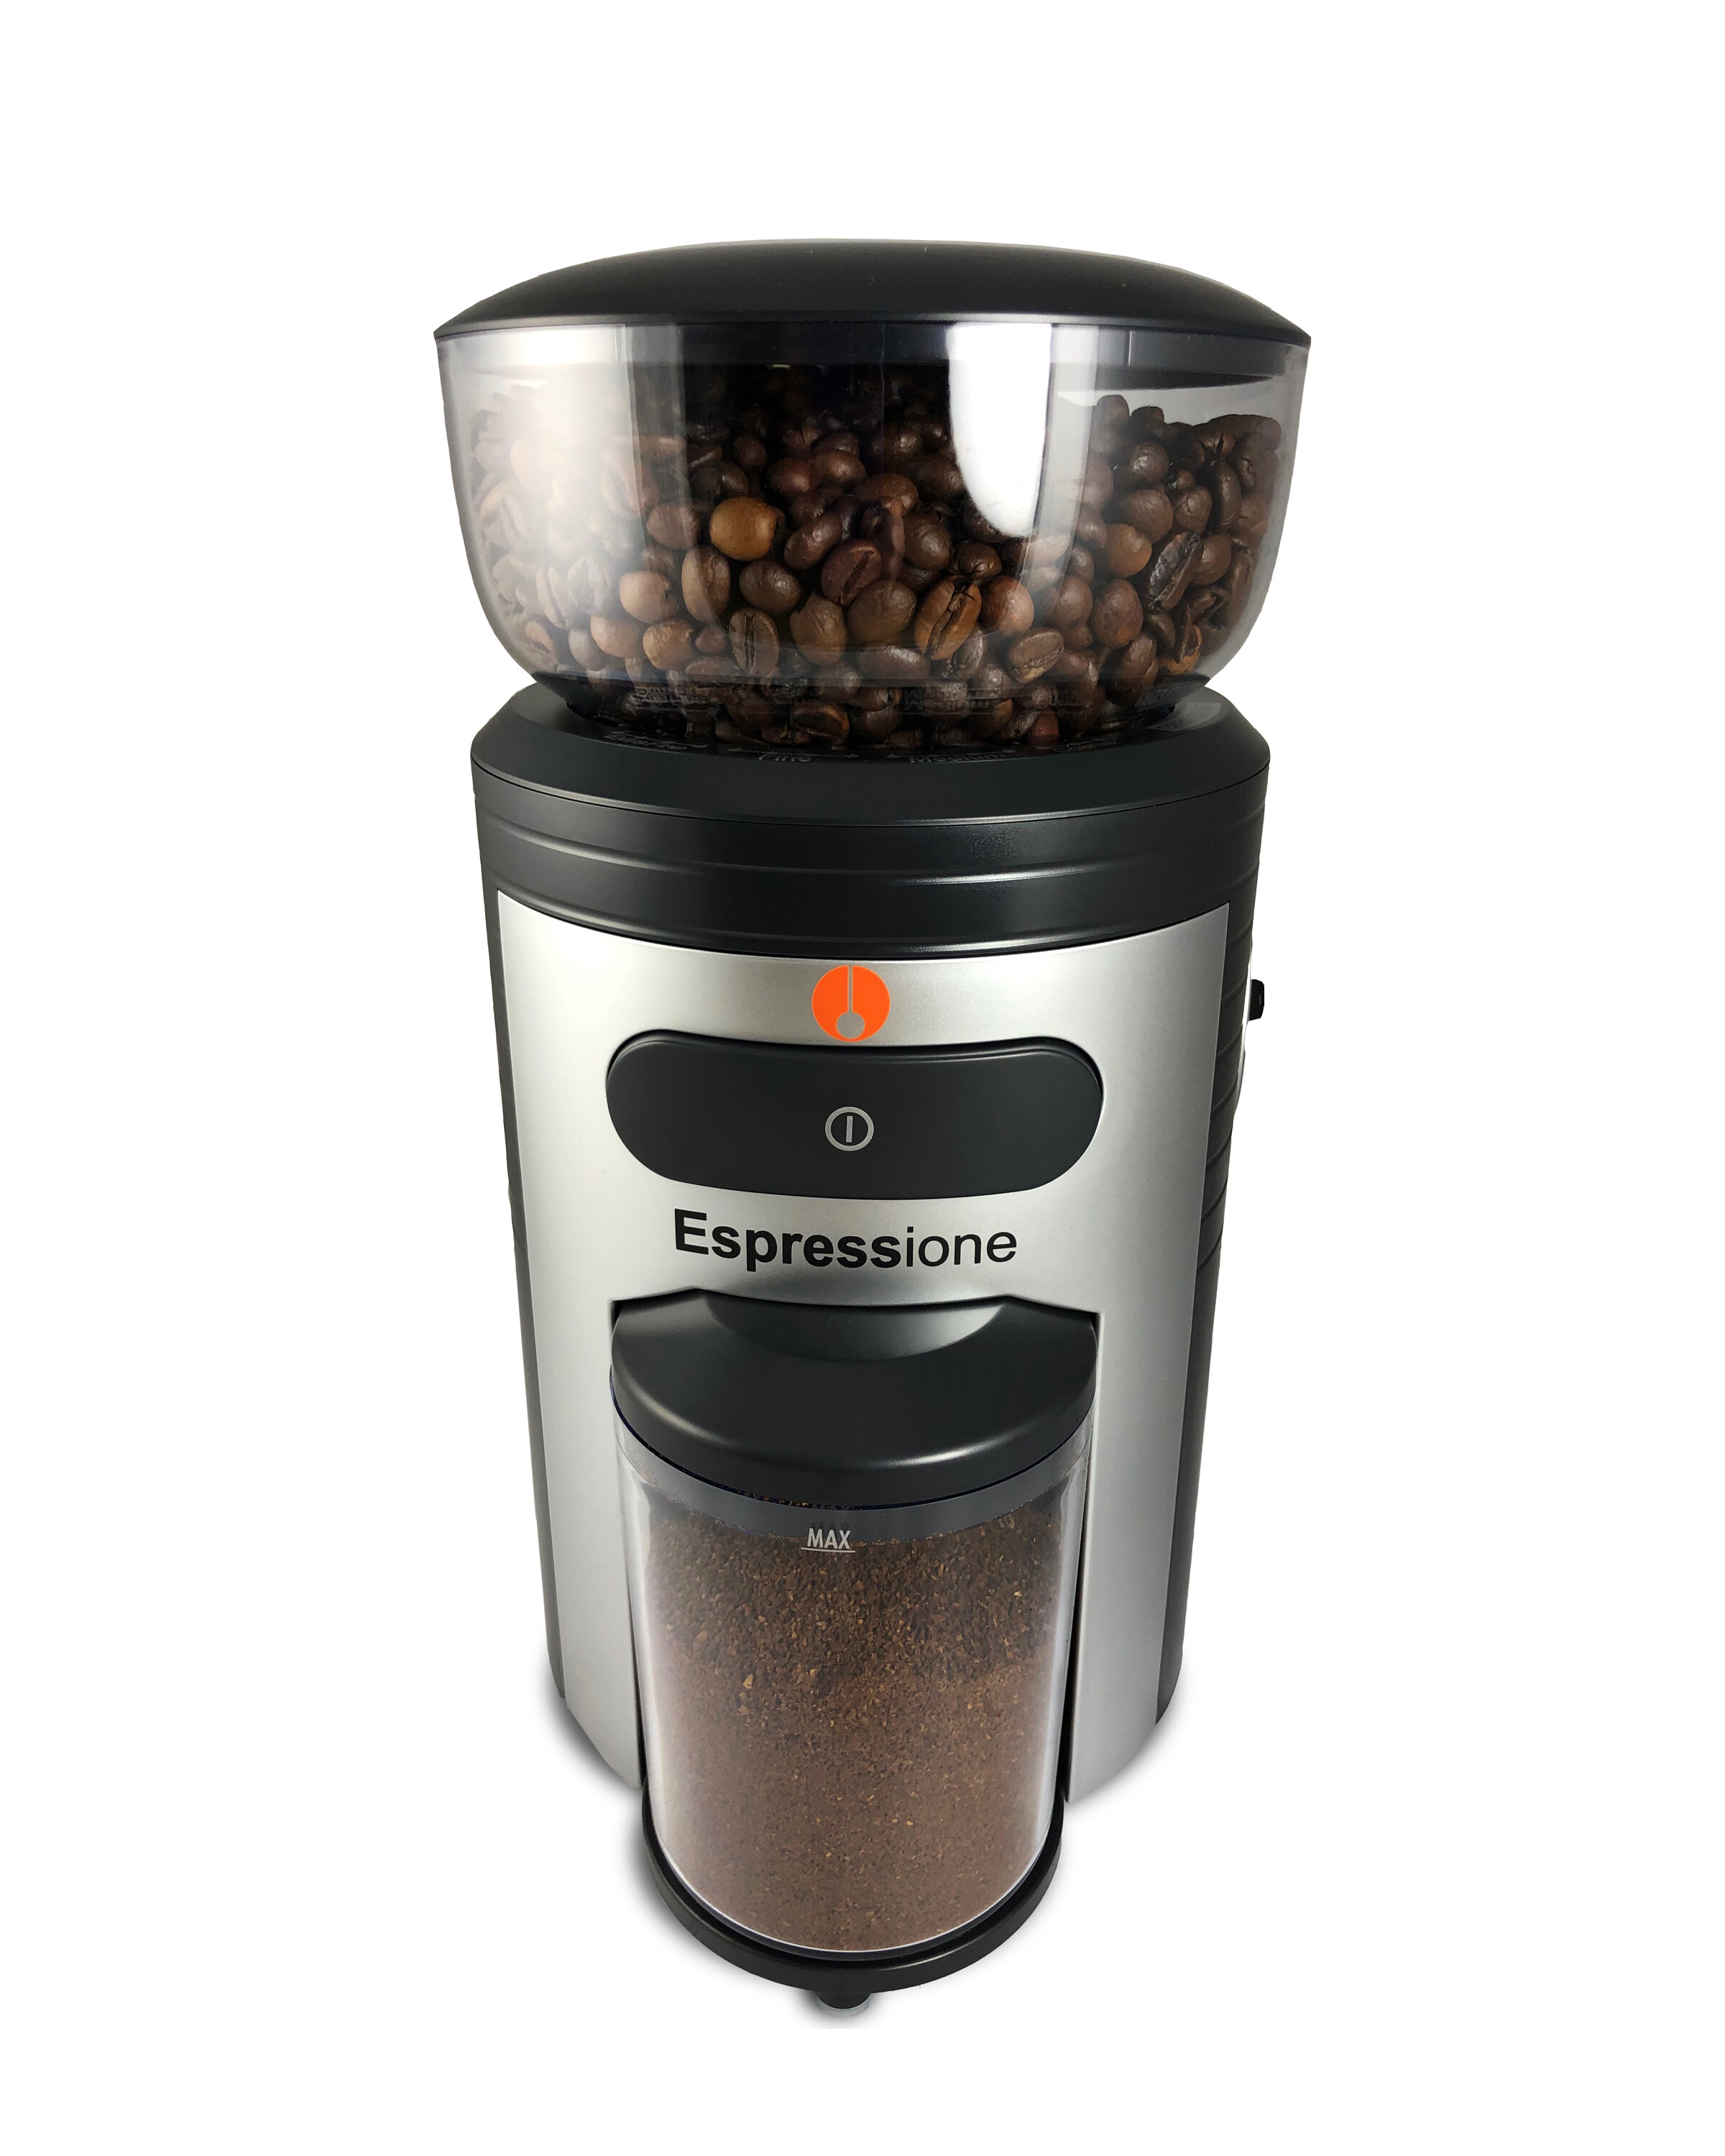 Espressione Conical Burr Coffee Grinder – The Seasoned Gourmet